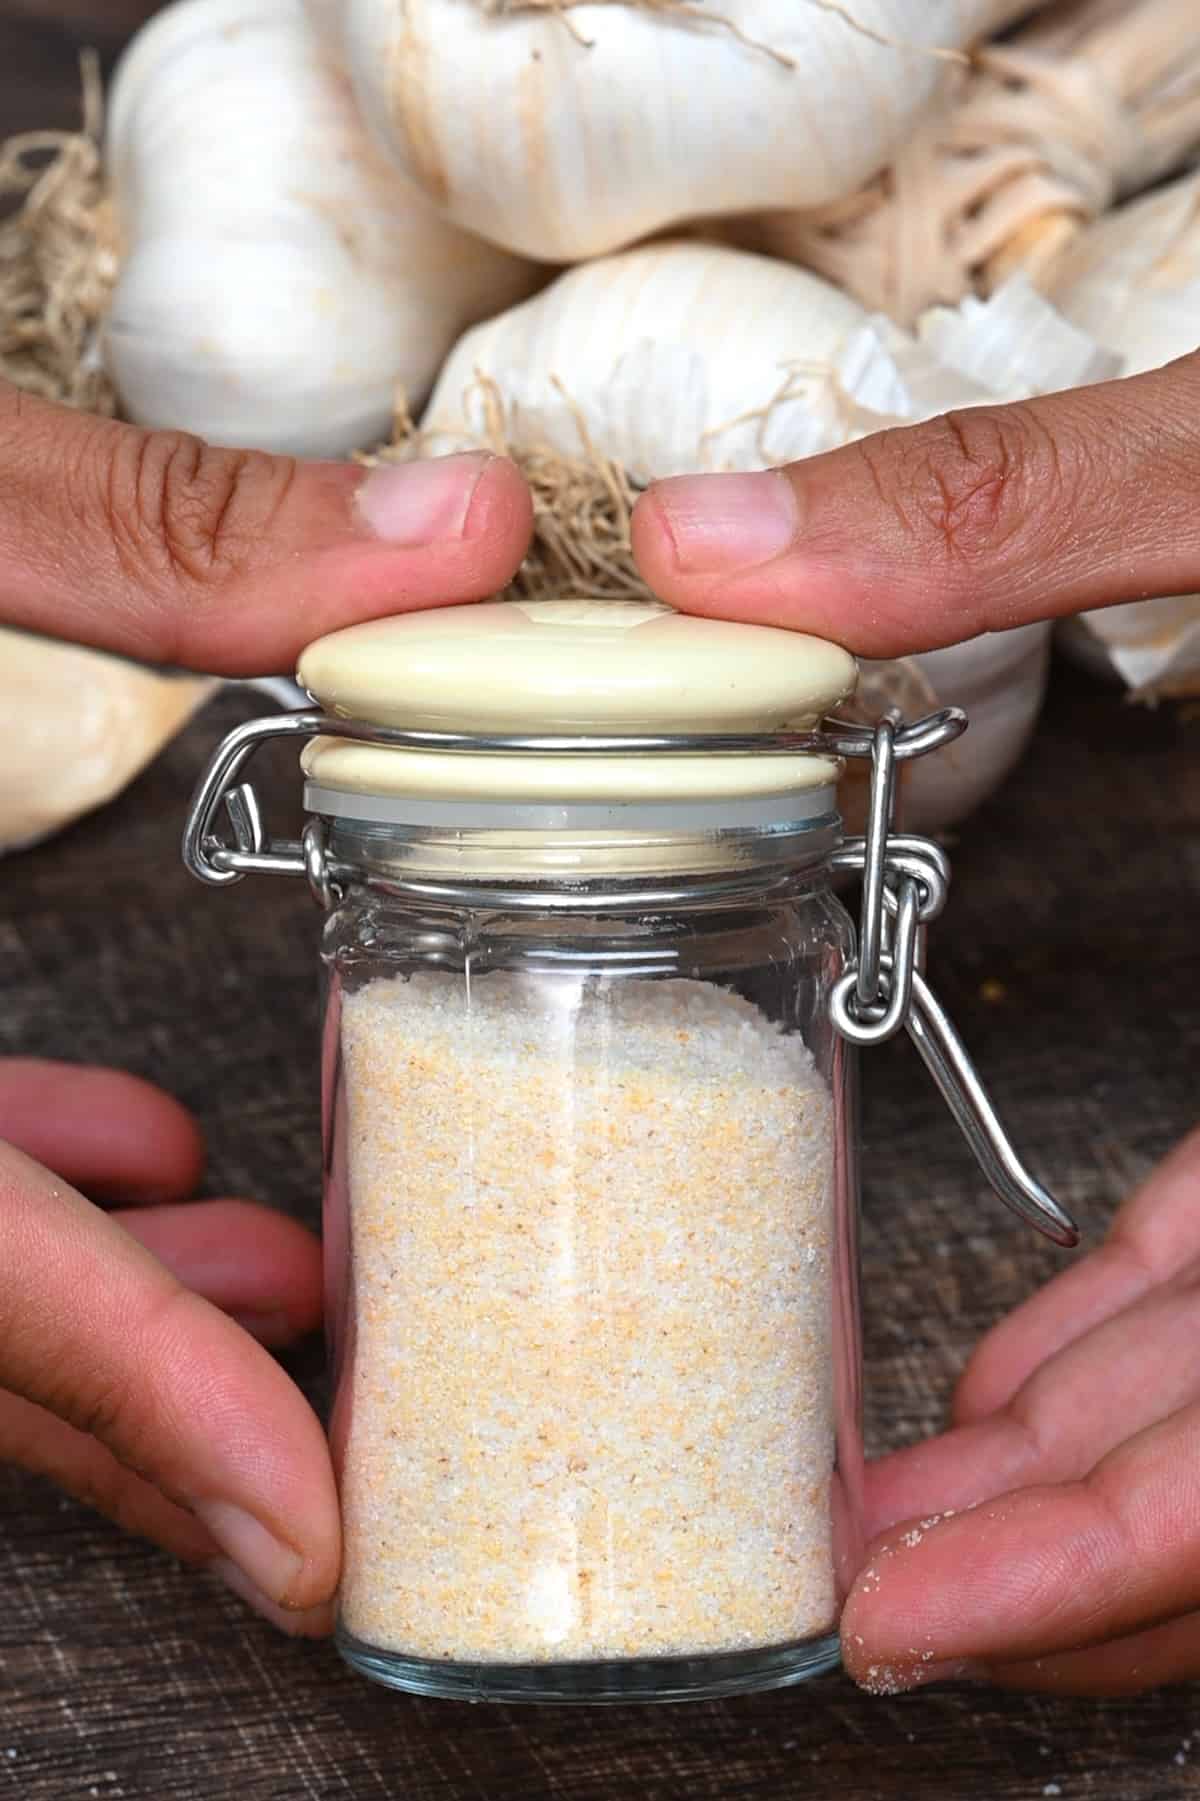 Homemade garlic salt in a small jar